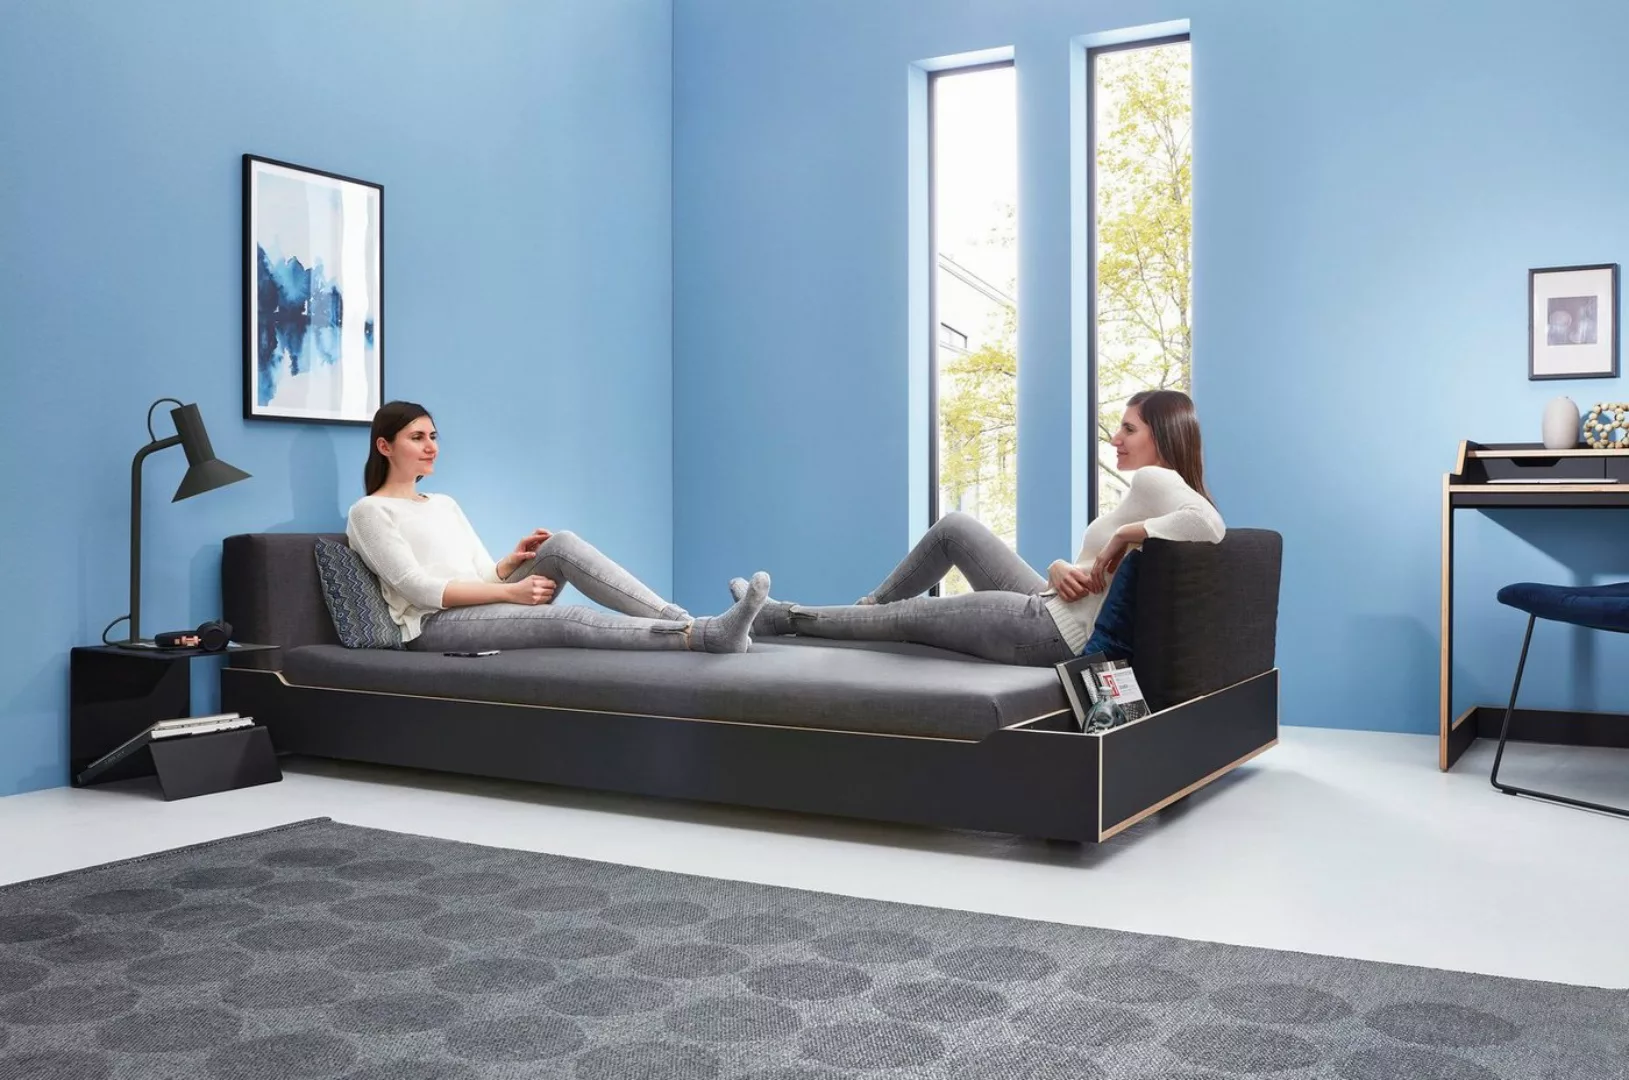 Müller SMALL LIVING Futonbett MAUDE Bett, Überlänge 210 cm günstig online kaufen